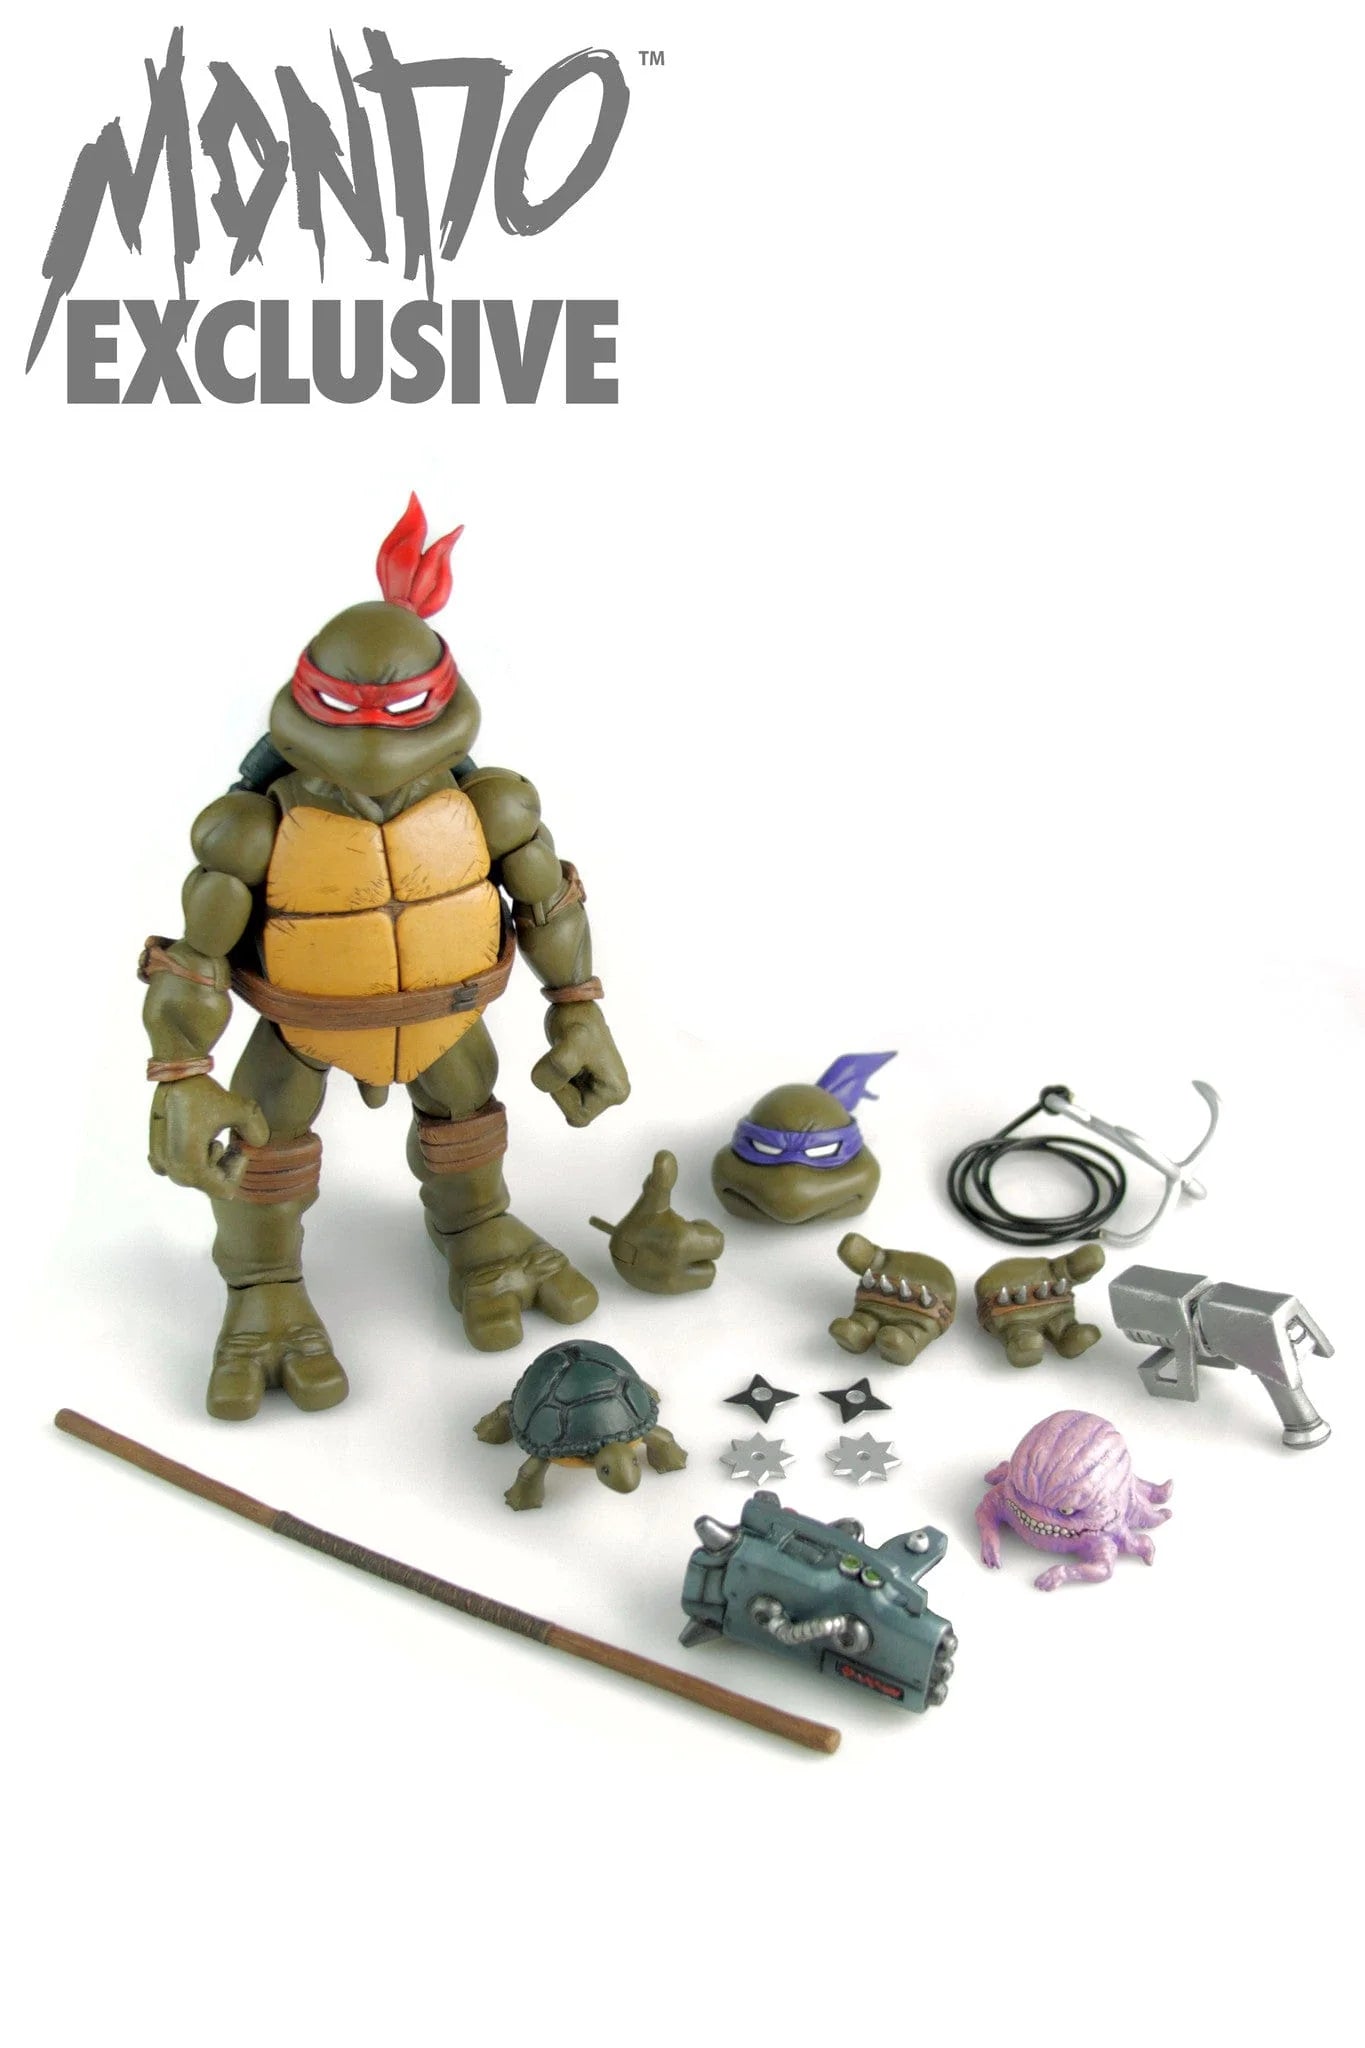 Mondo TMNT Donatello 1/6 Scale Collectible Figure Exclusive (New/Water Damaged Box)